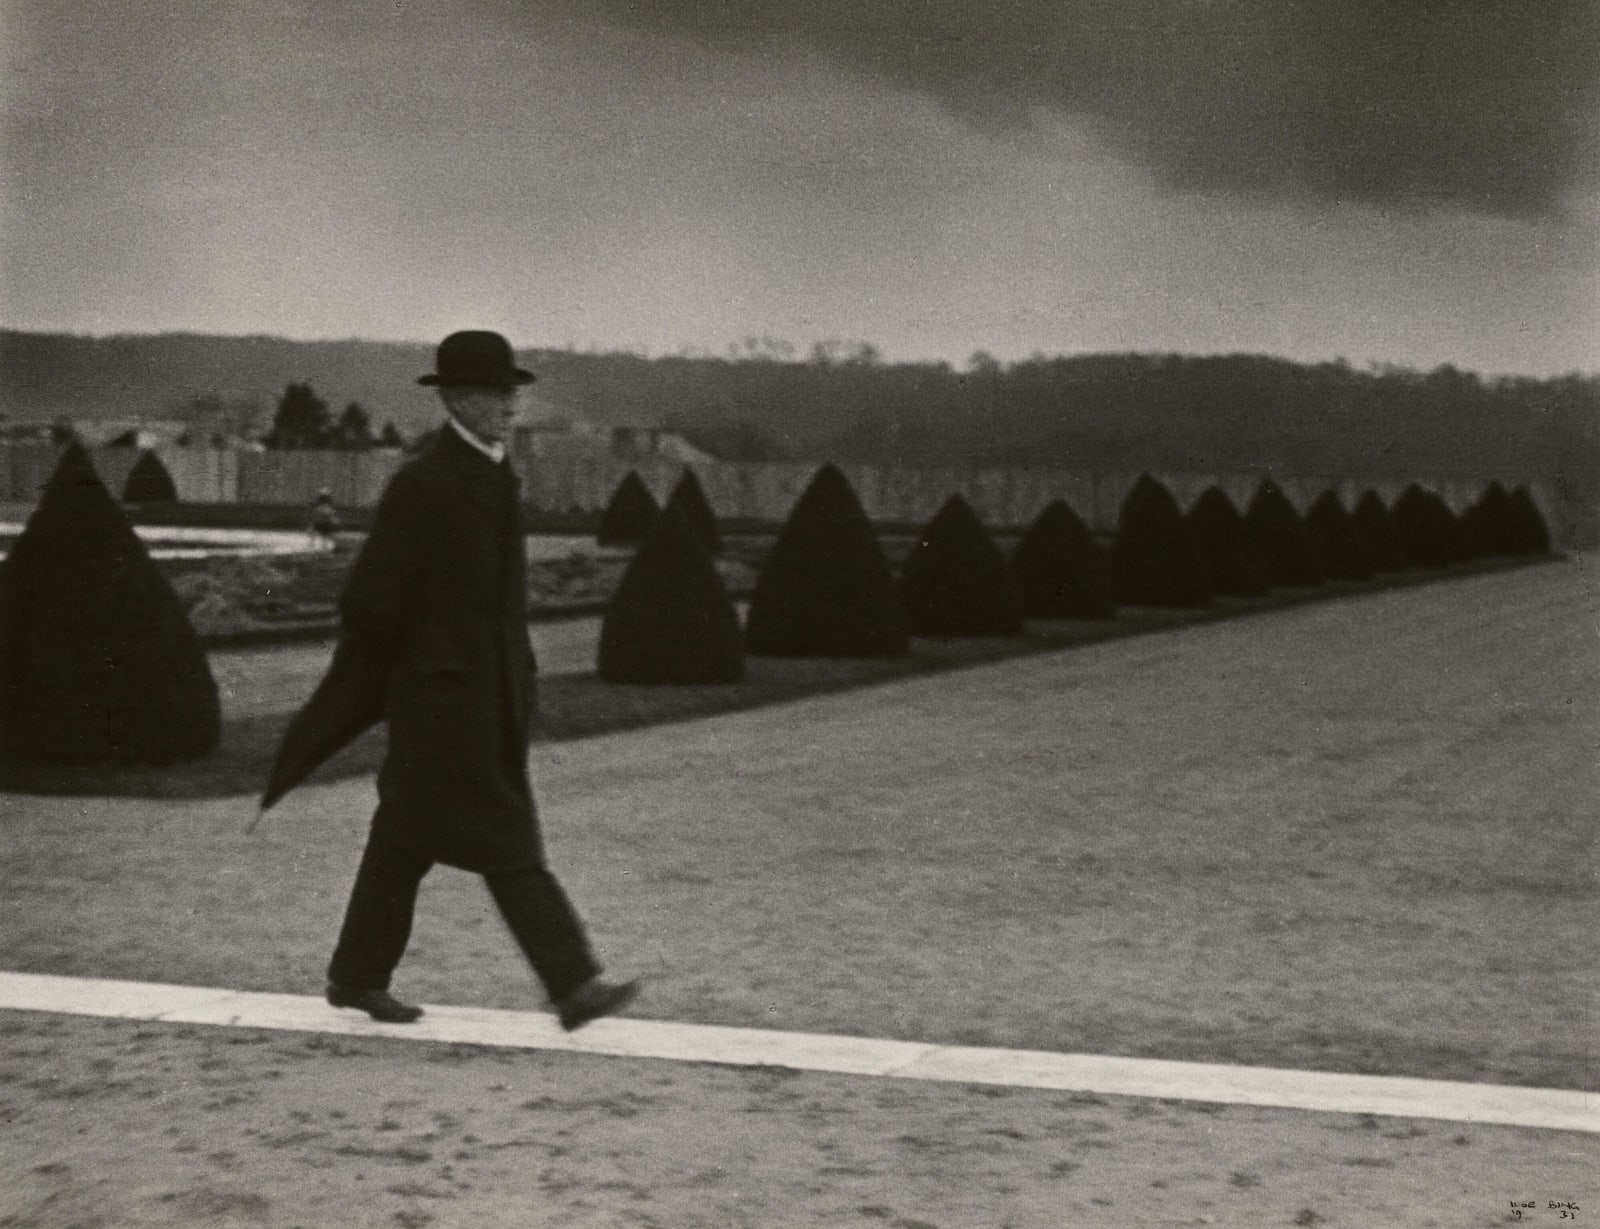 Ilse Bing photograph of bourgeois man walking along path